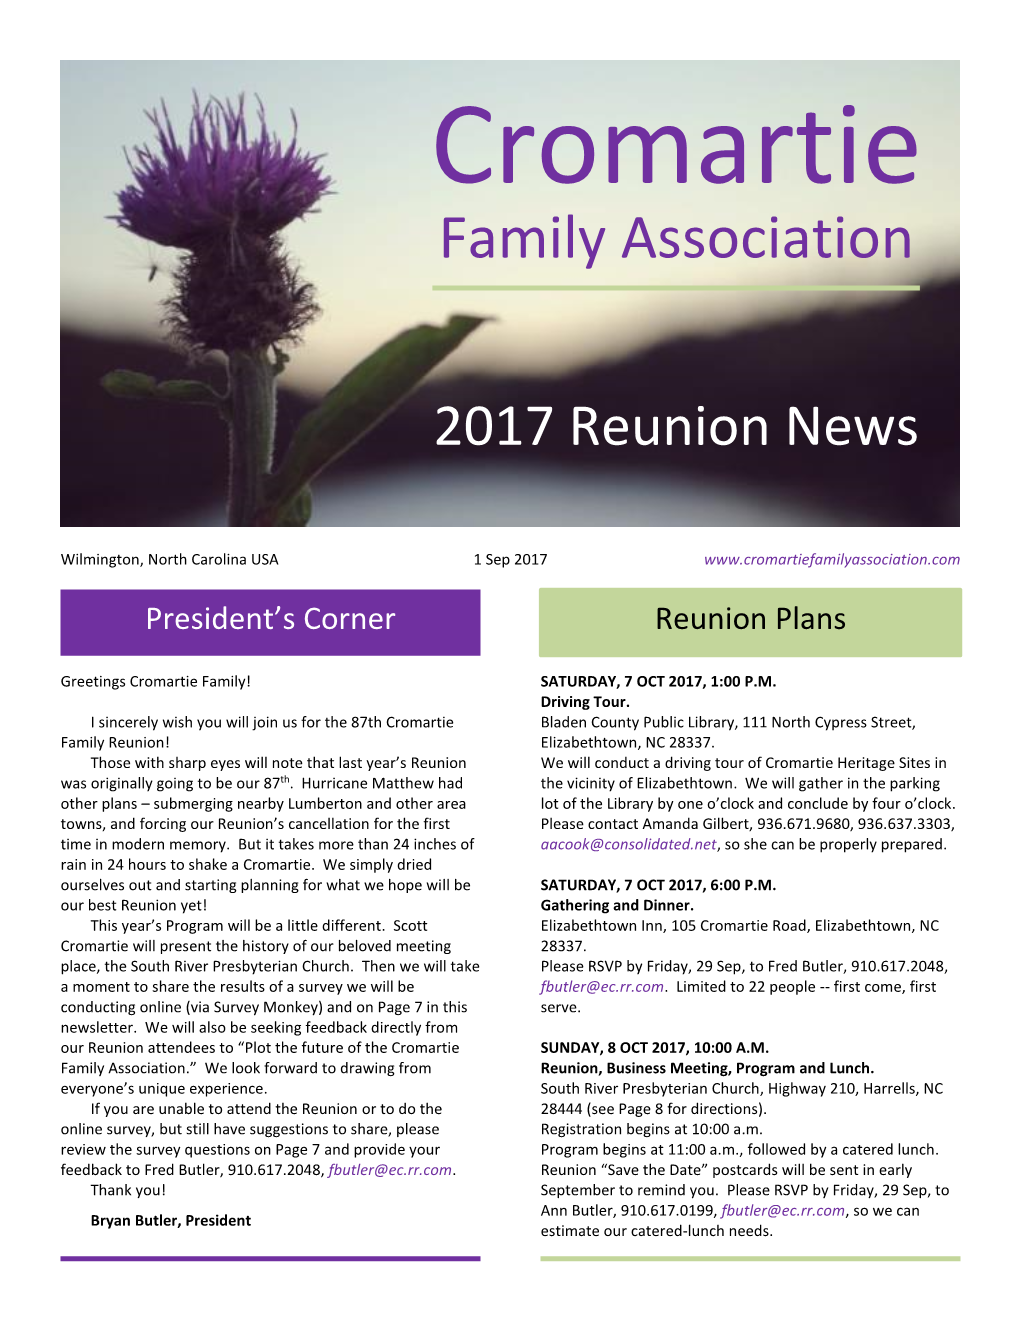 Read Reunion News